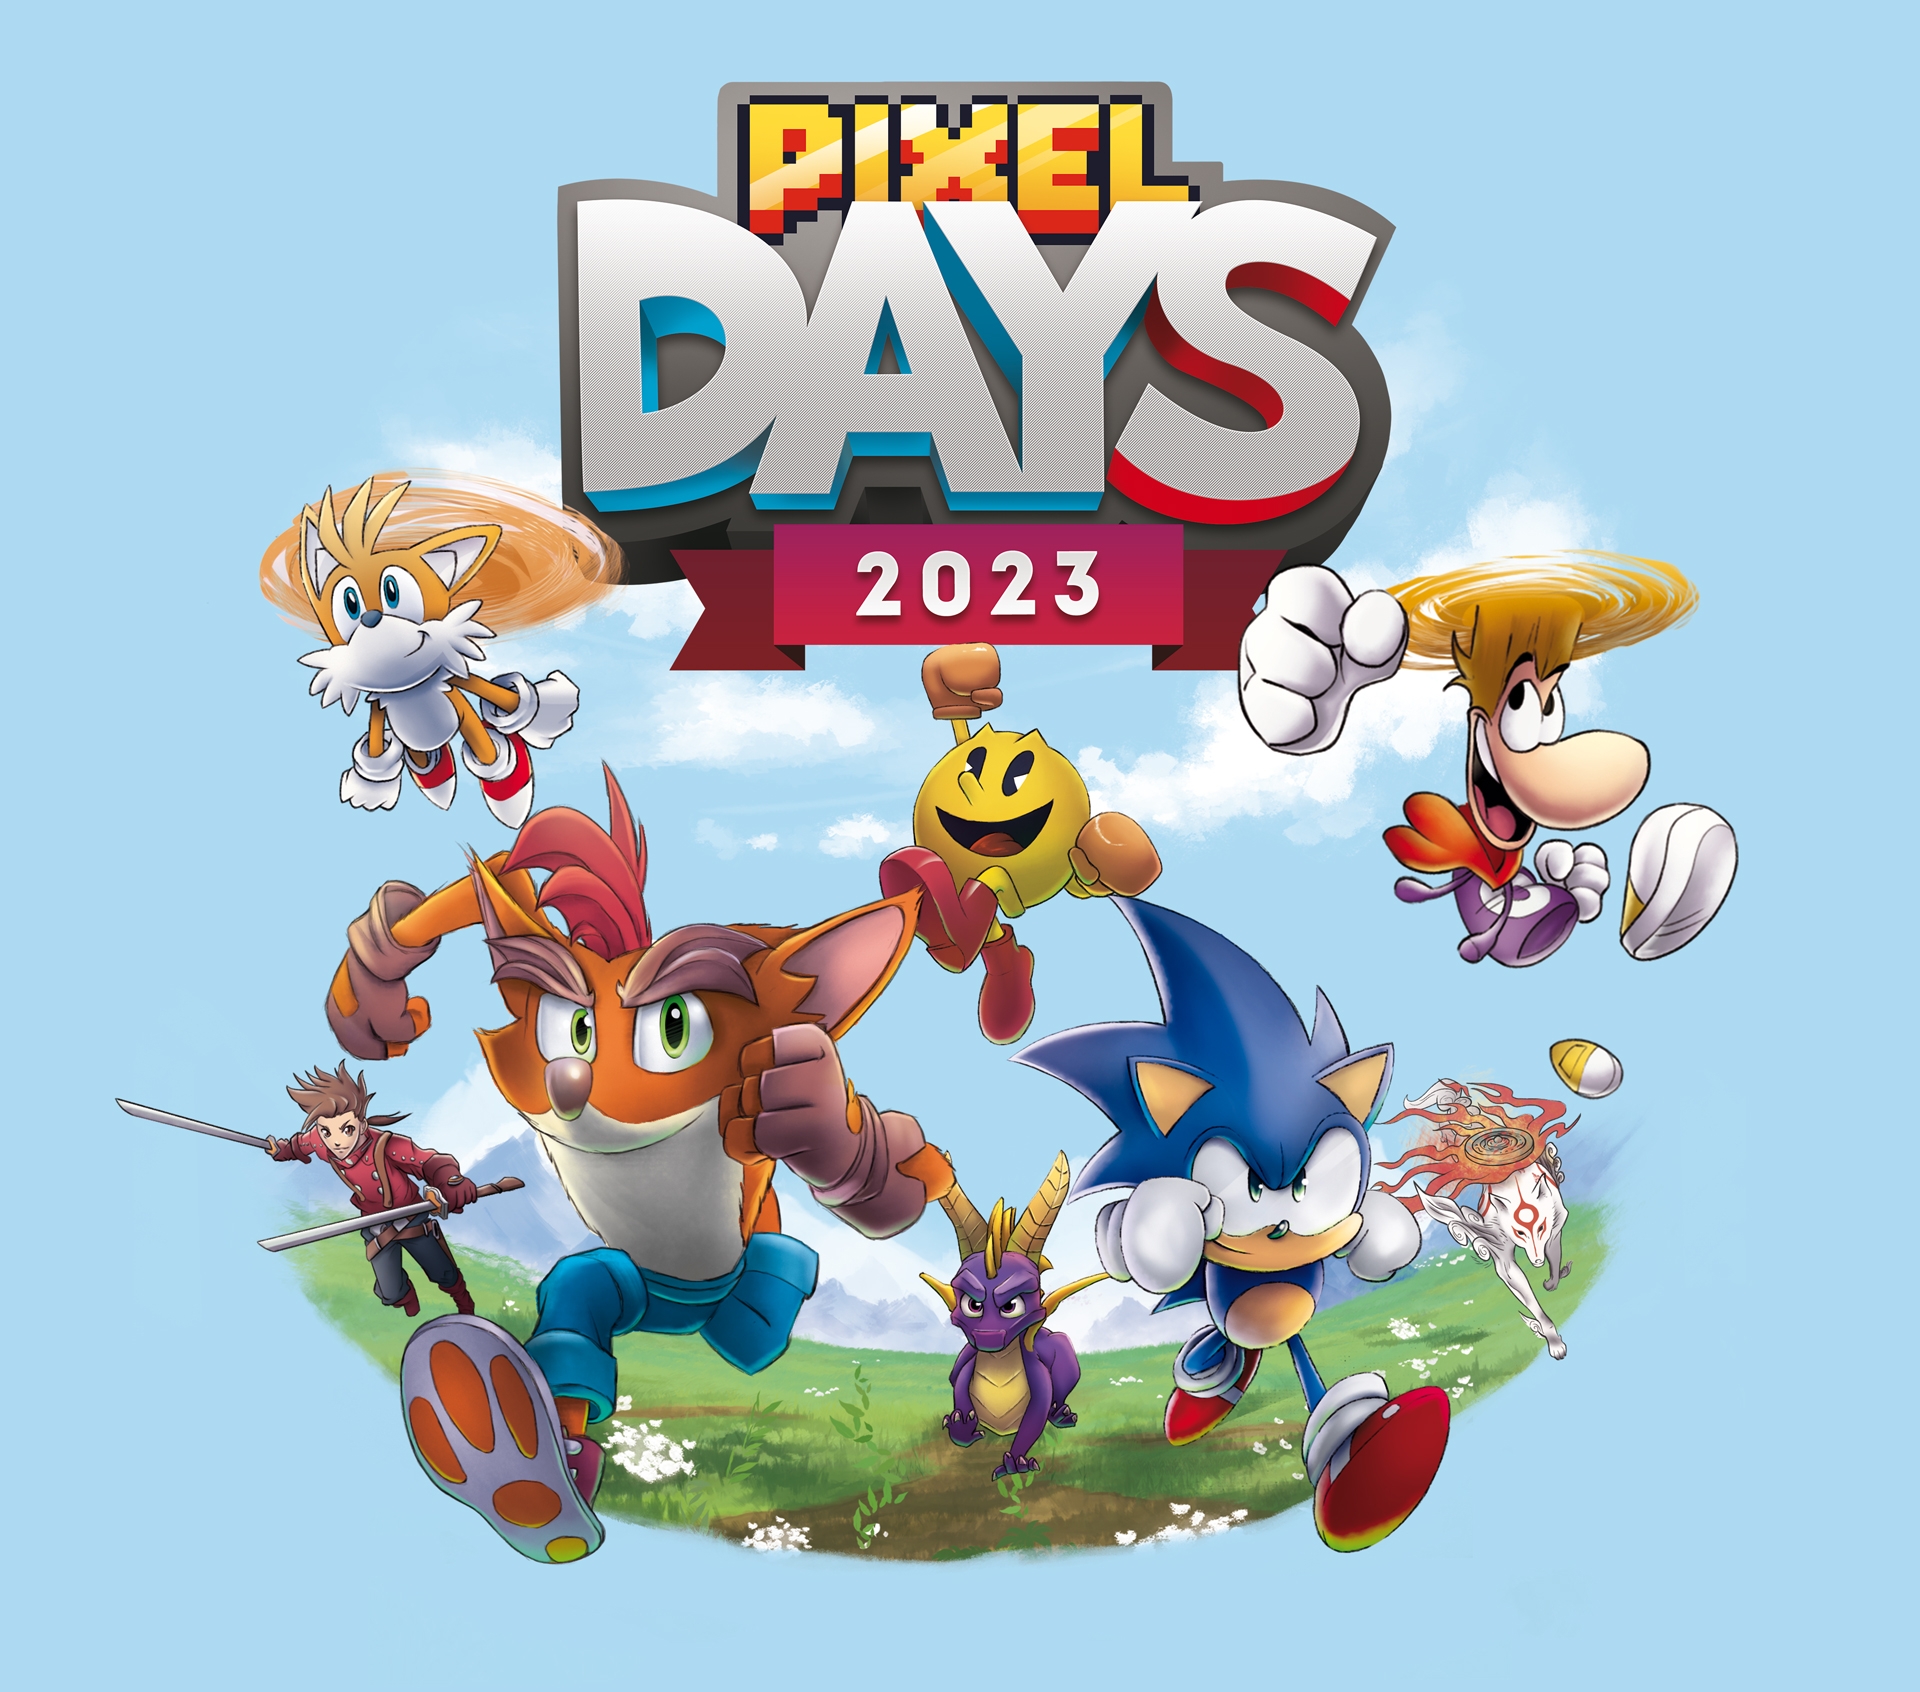 Pixel days 2023